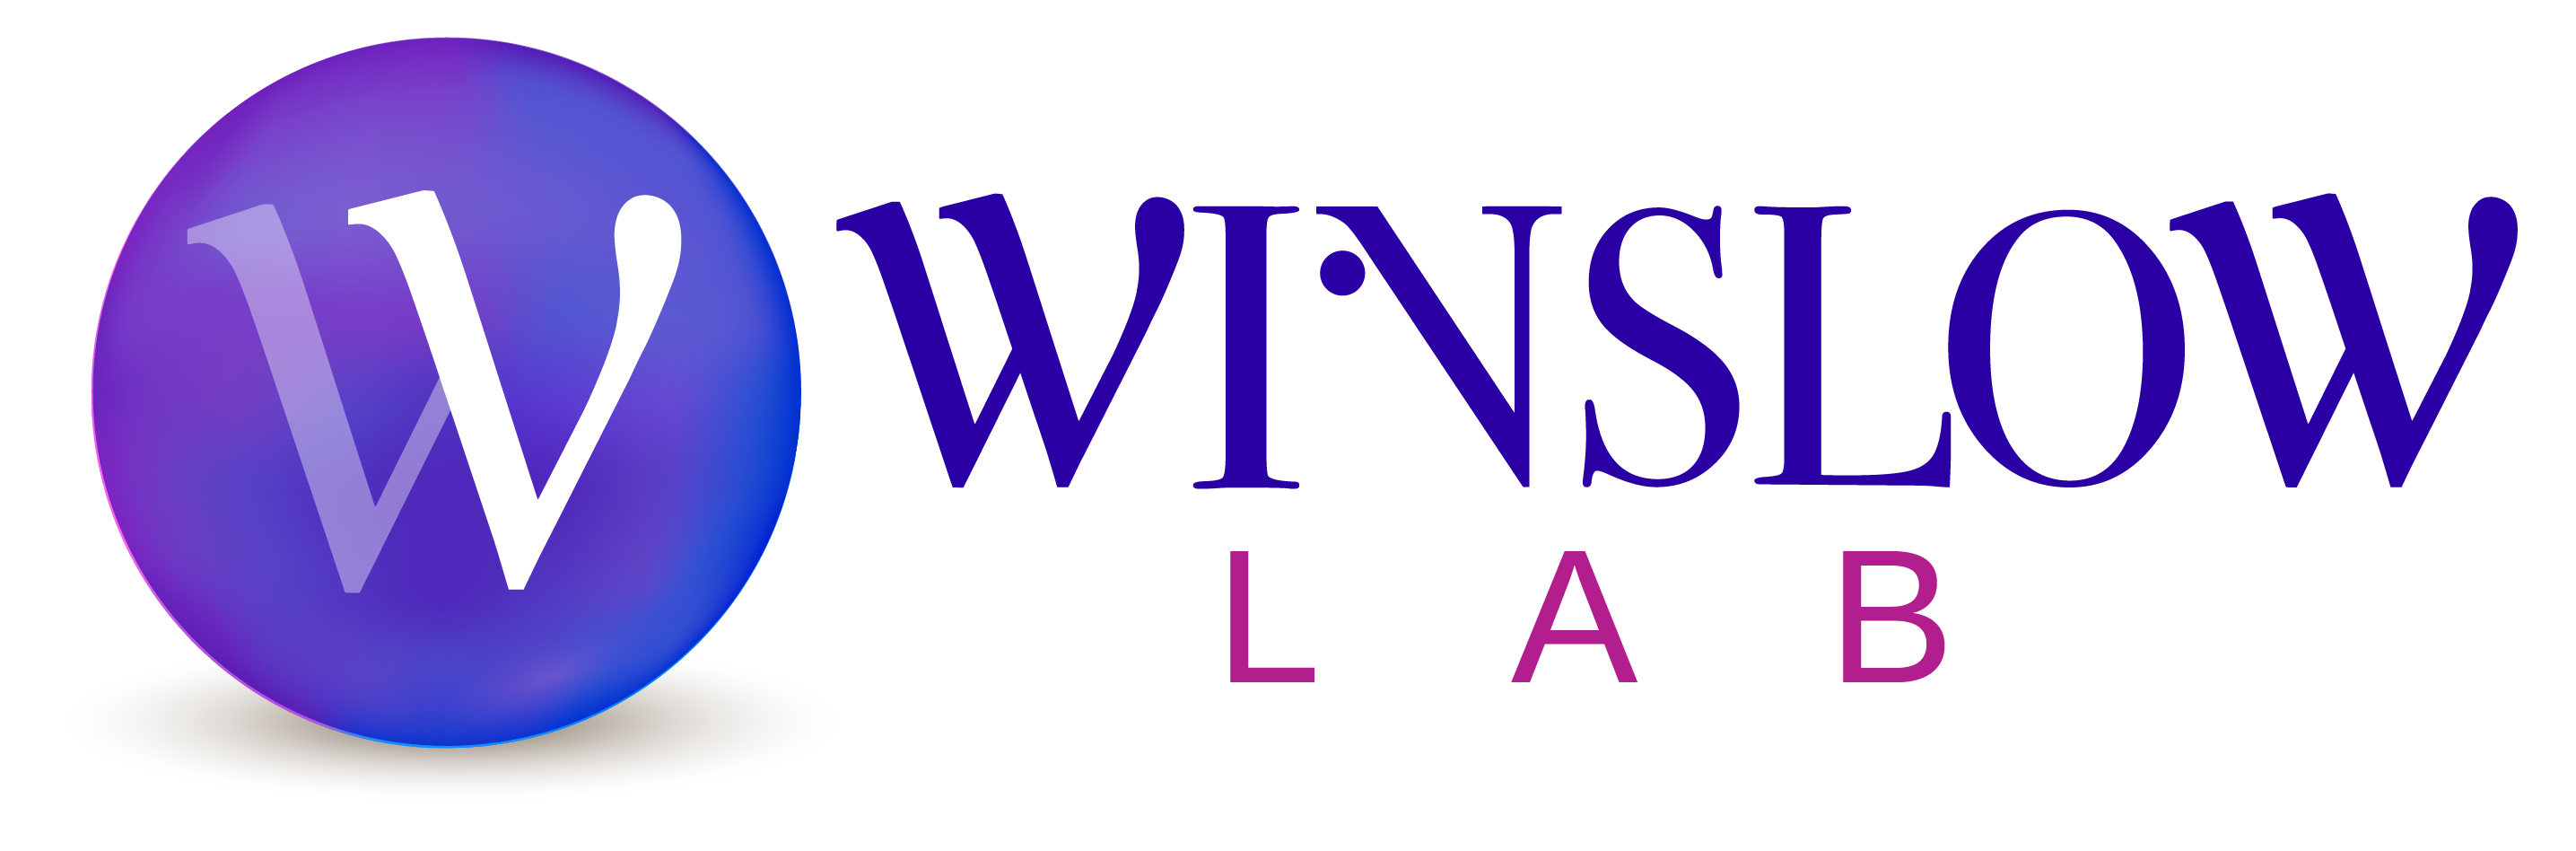 Winslow Lab